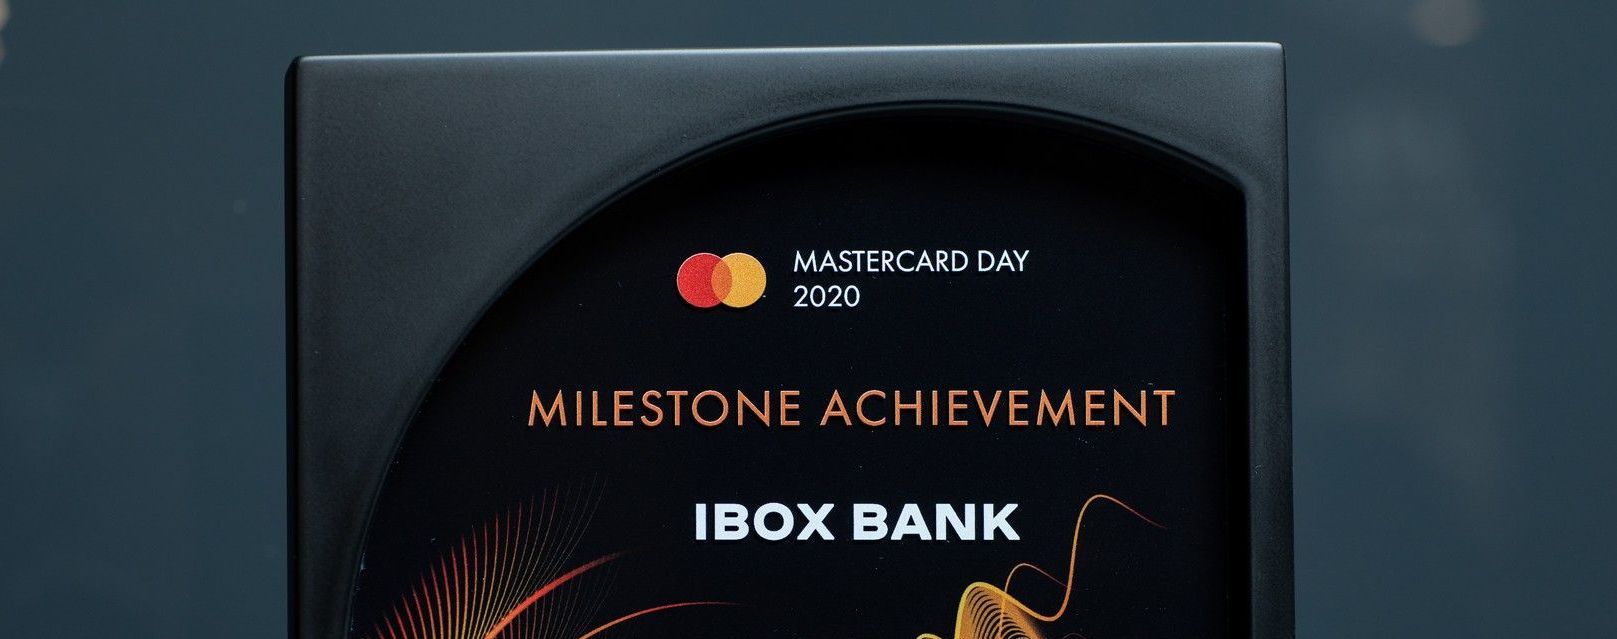 IBOX Bank отримав нагороду Milestone Achievement на Mastercard Day 2020 за отримання статусу принципального члена Mastercard